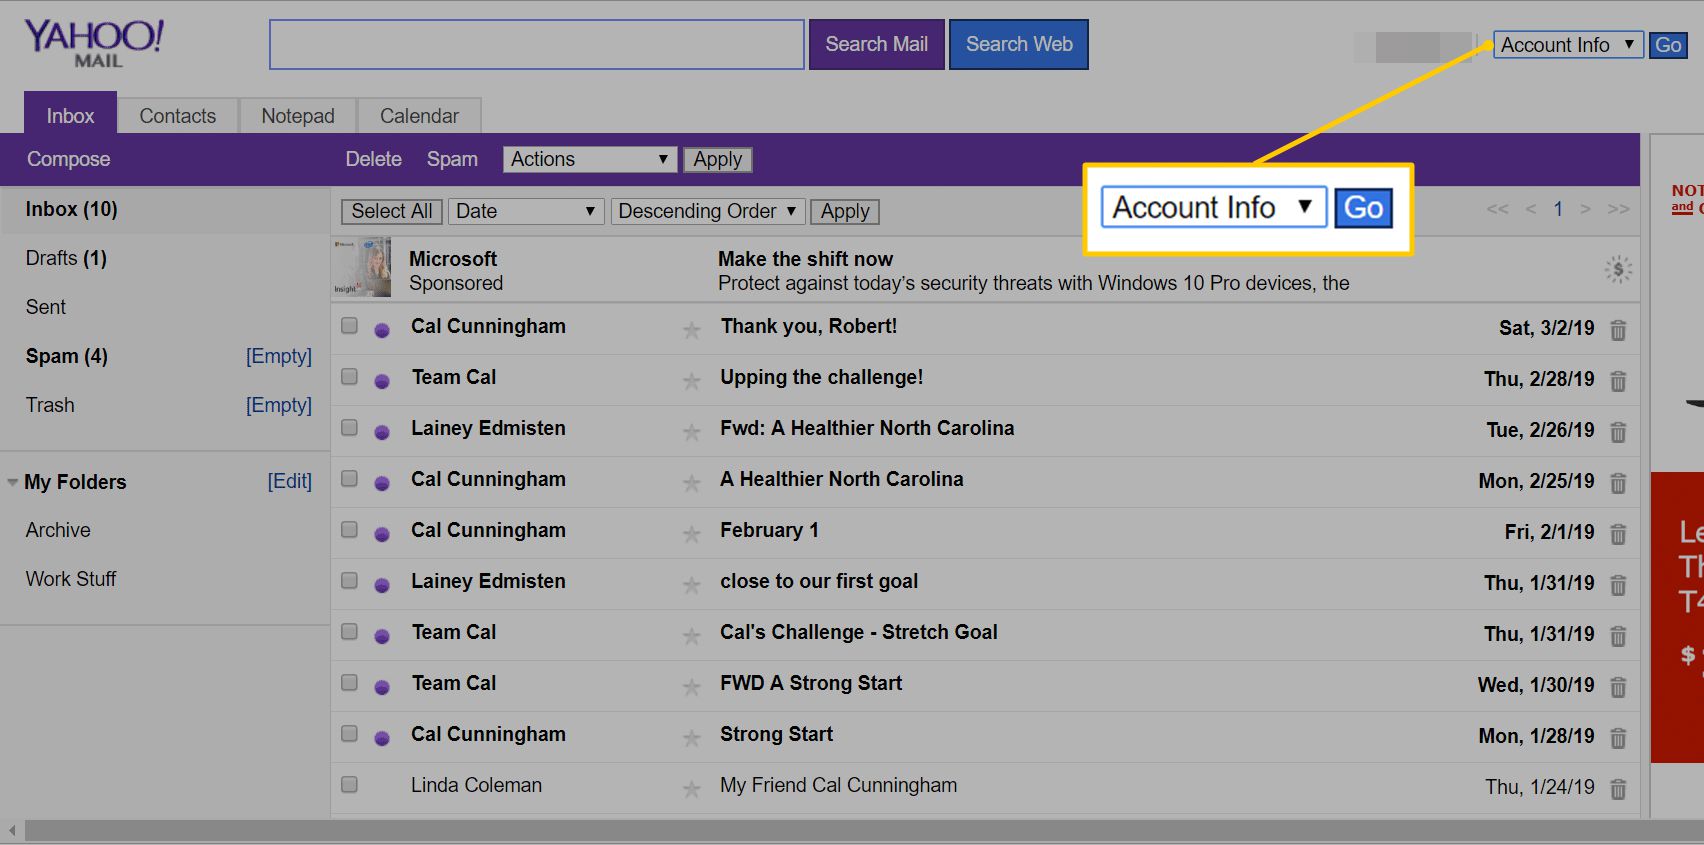 Accountinfo-menu in Yahoo Mail Basic